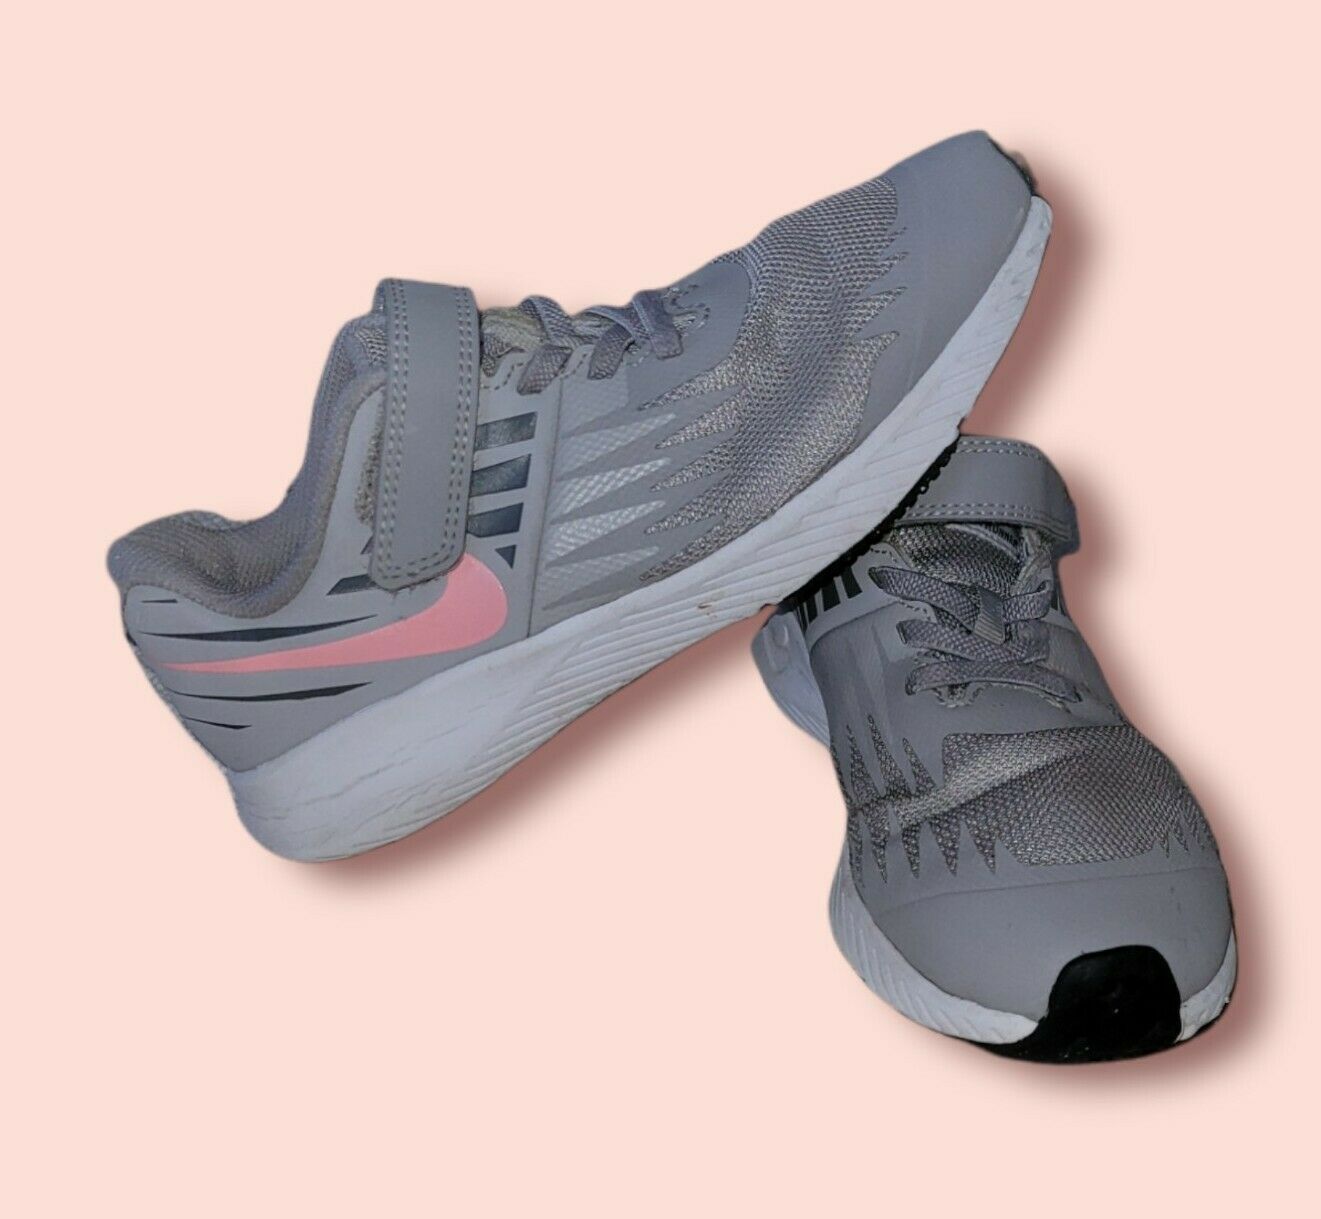 Girls Nike Tennis Shoes Size 3Y